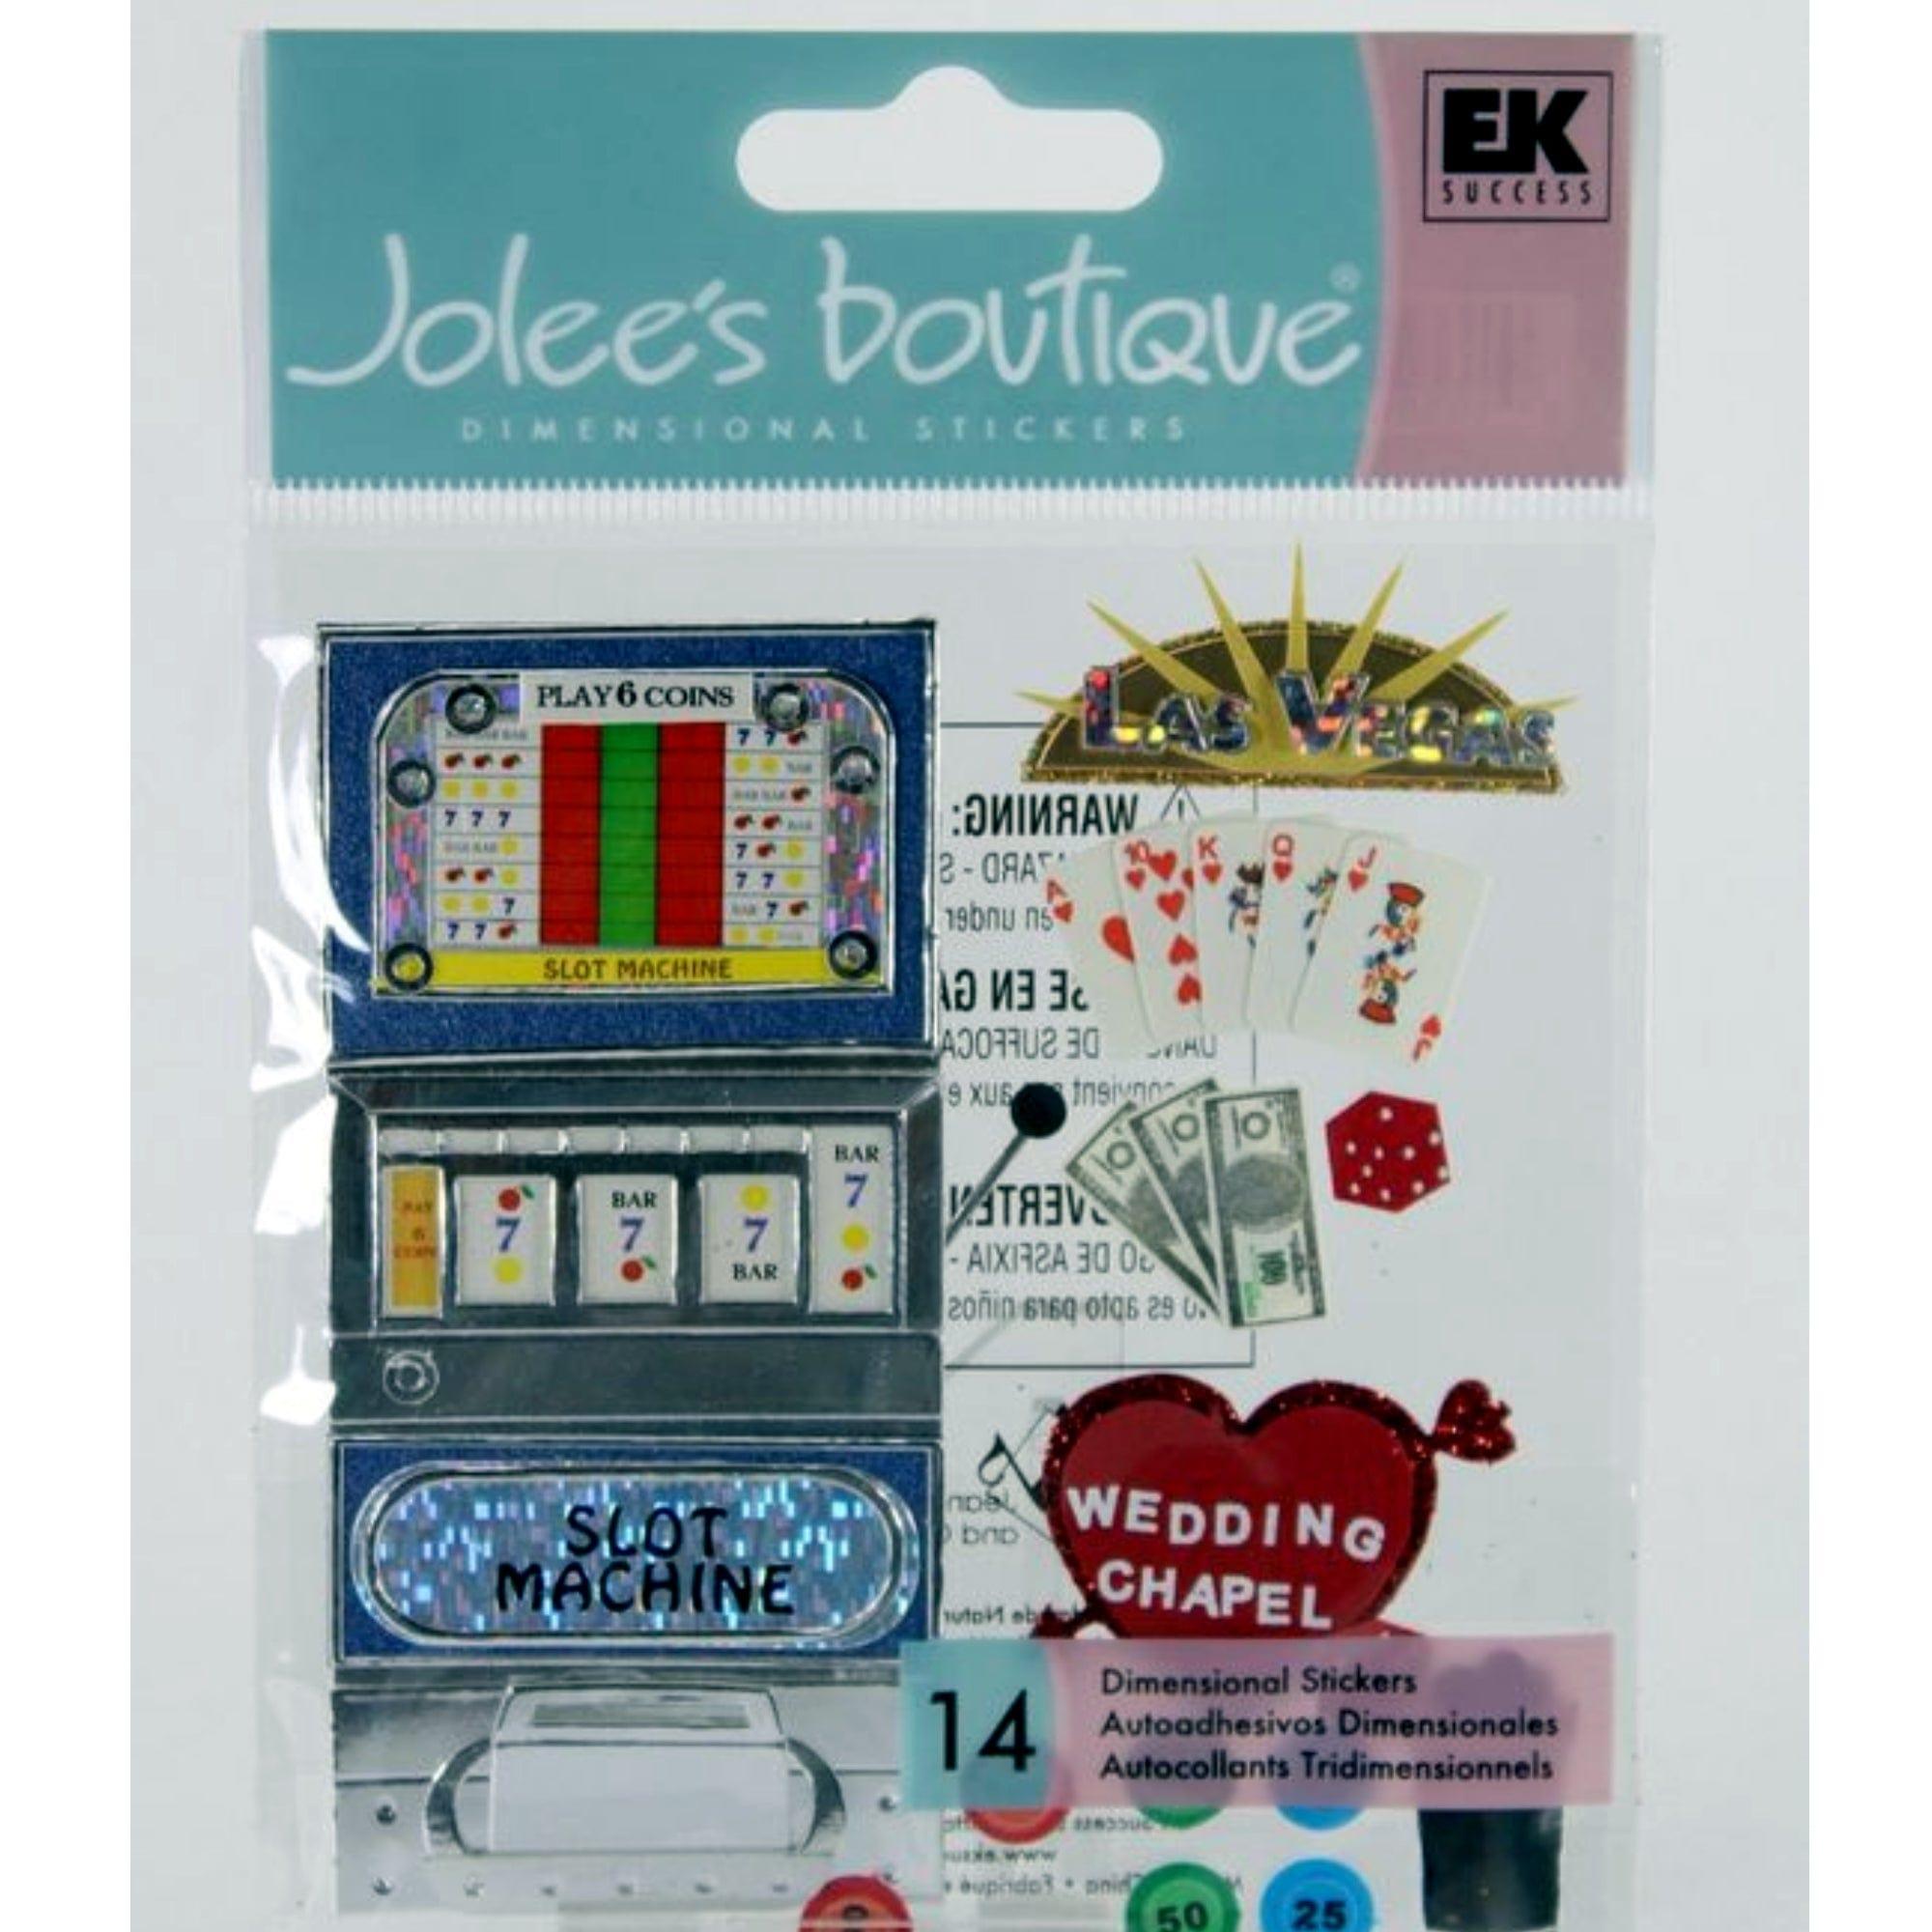 Las Vegas, Nevada Jolee's Boutique Scrapbook Embellishment by EK Success - Scrapbook Supply Companies